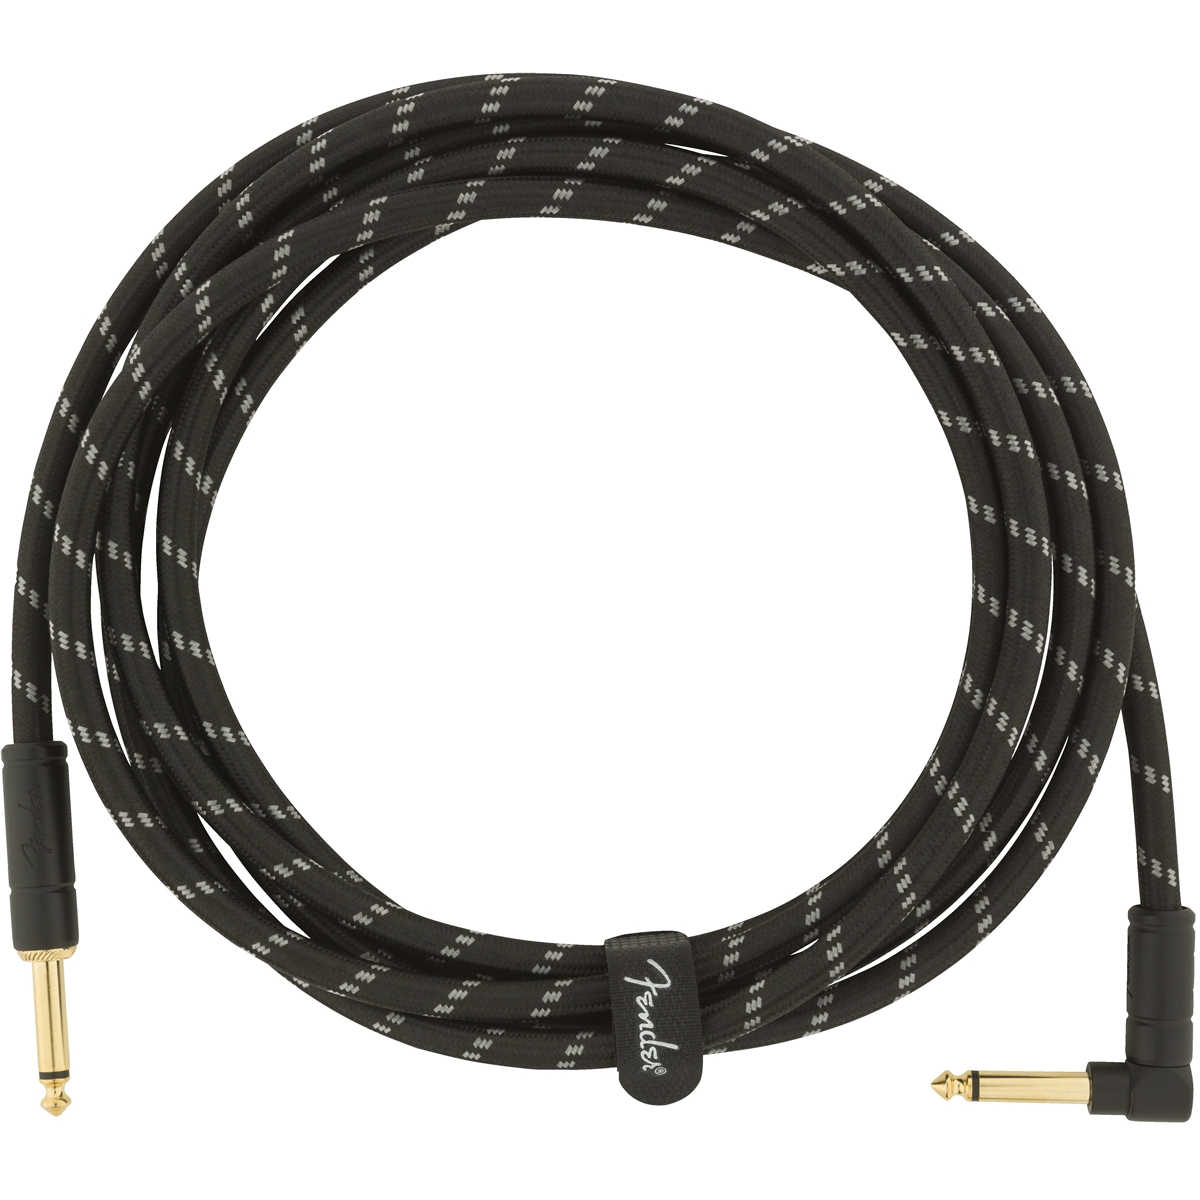 Fender Deluxe Series Instrument Cable, 10 FT, Black Tweed